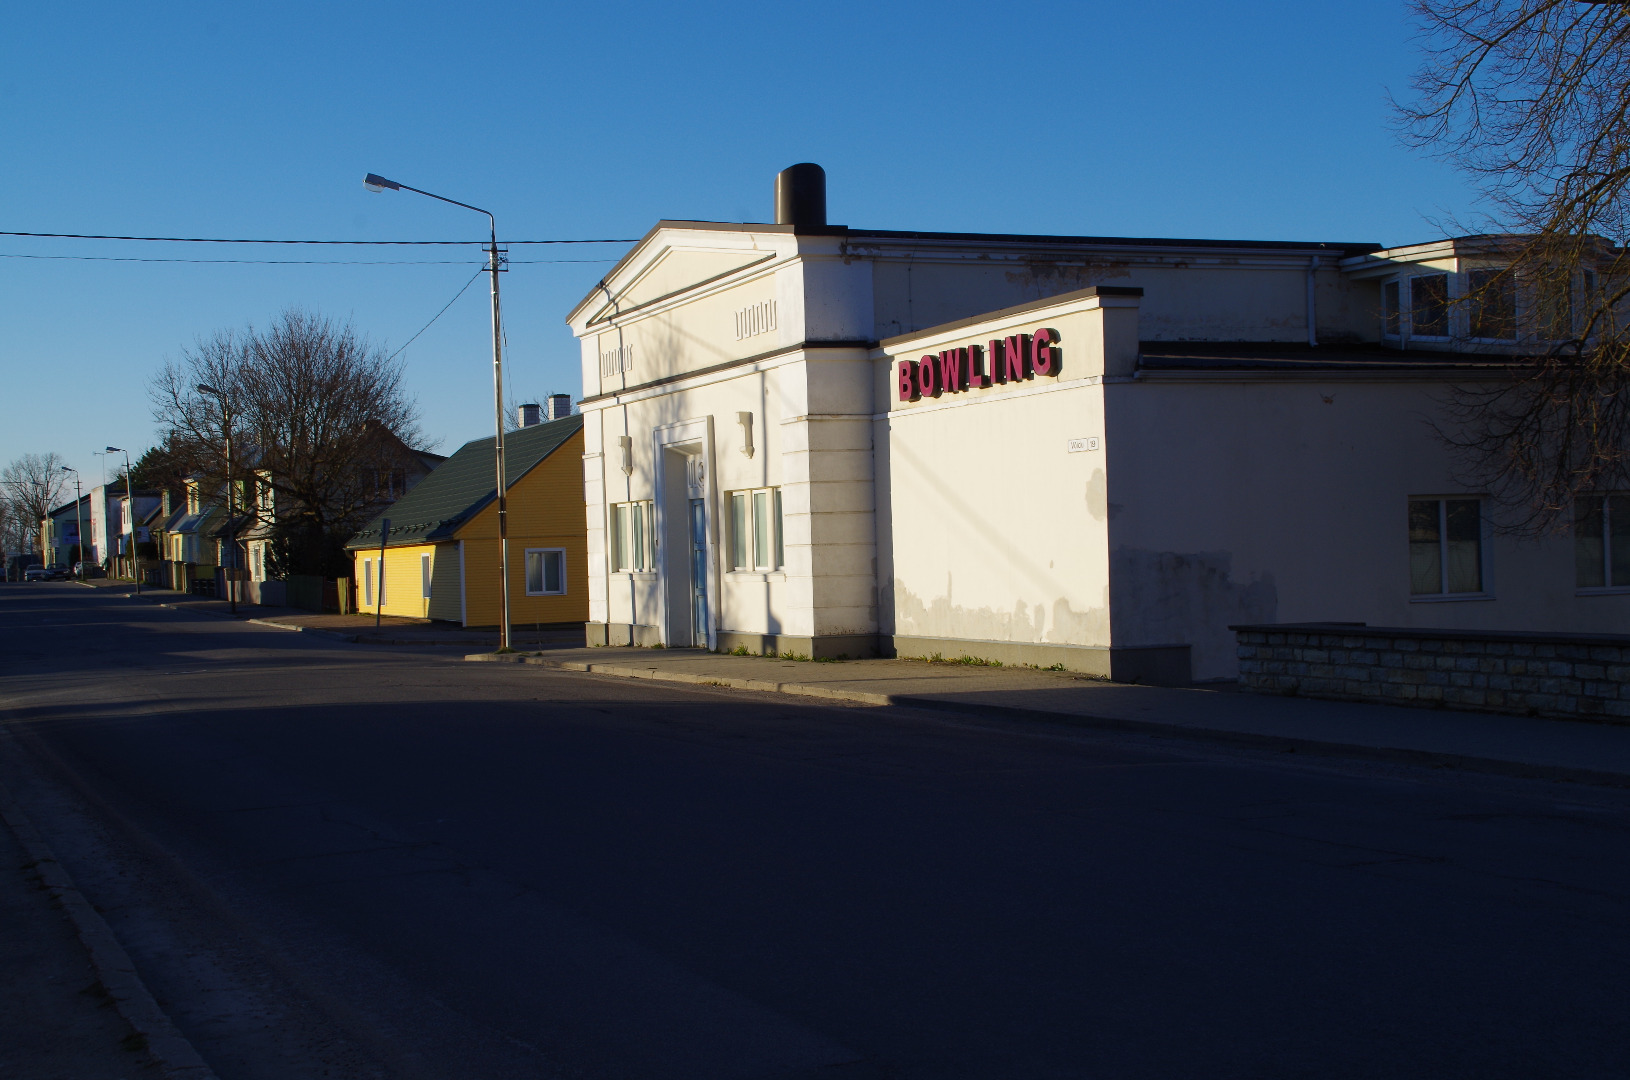 Former cinema Union building Winning Street in Tallinn rephoto